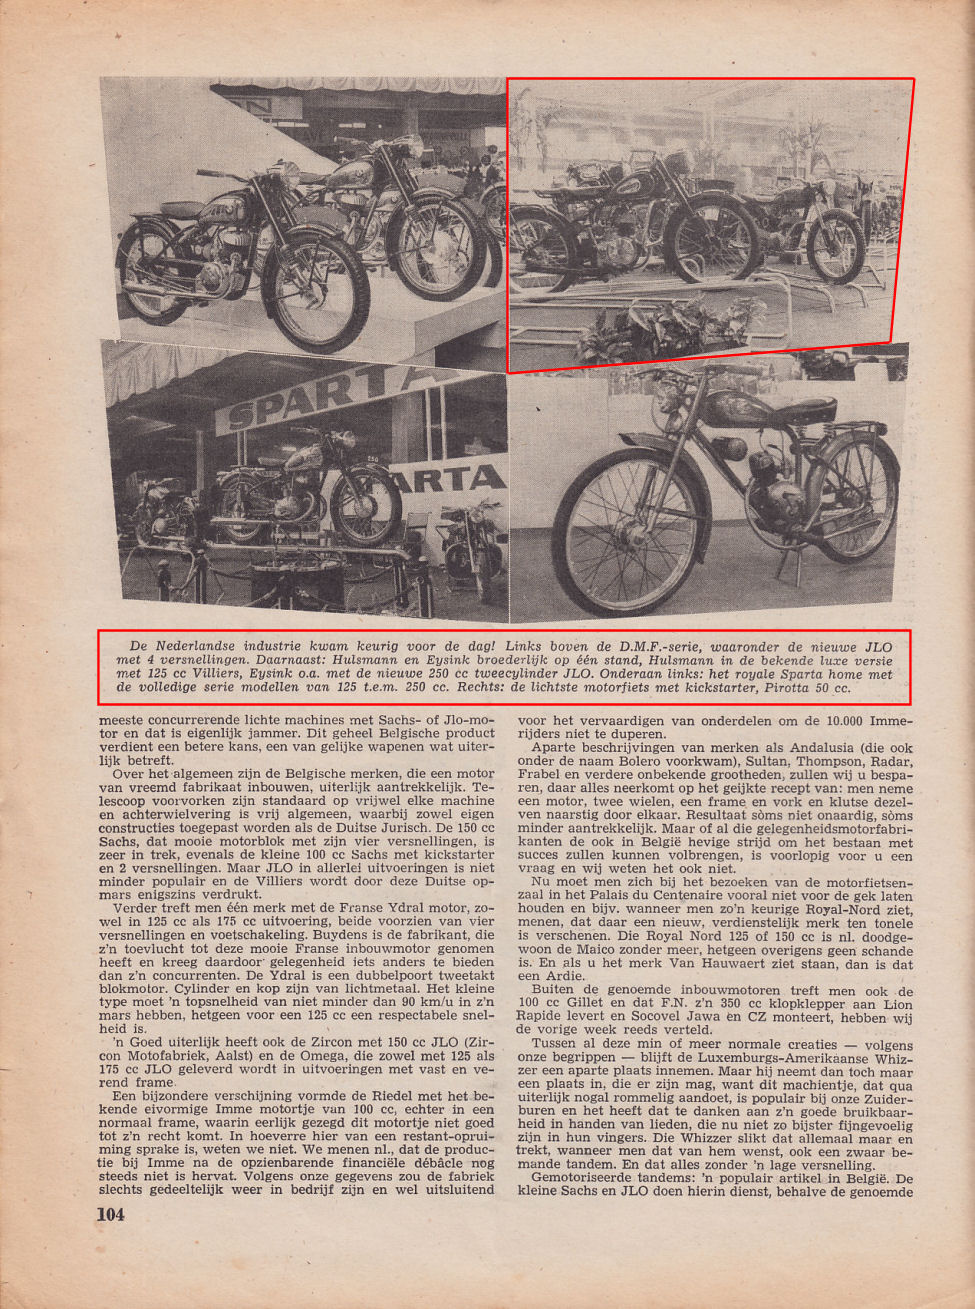 Verslag Salon Brussel 1952 - Weekblad Motor nr. 5 1952